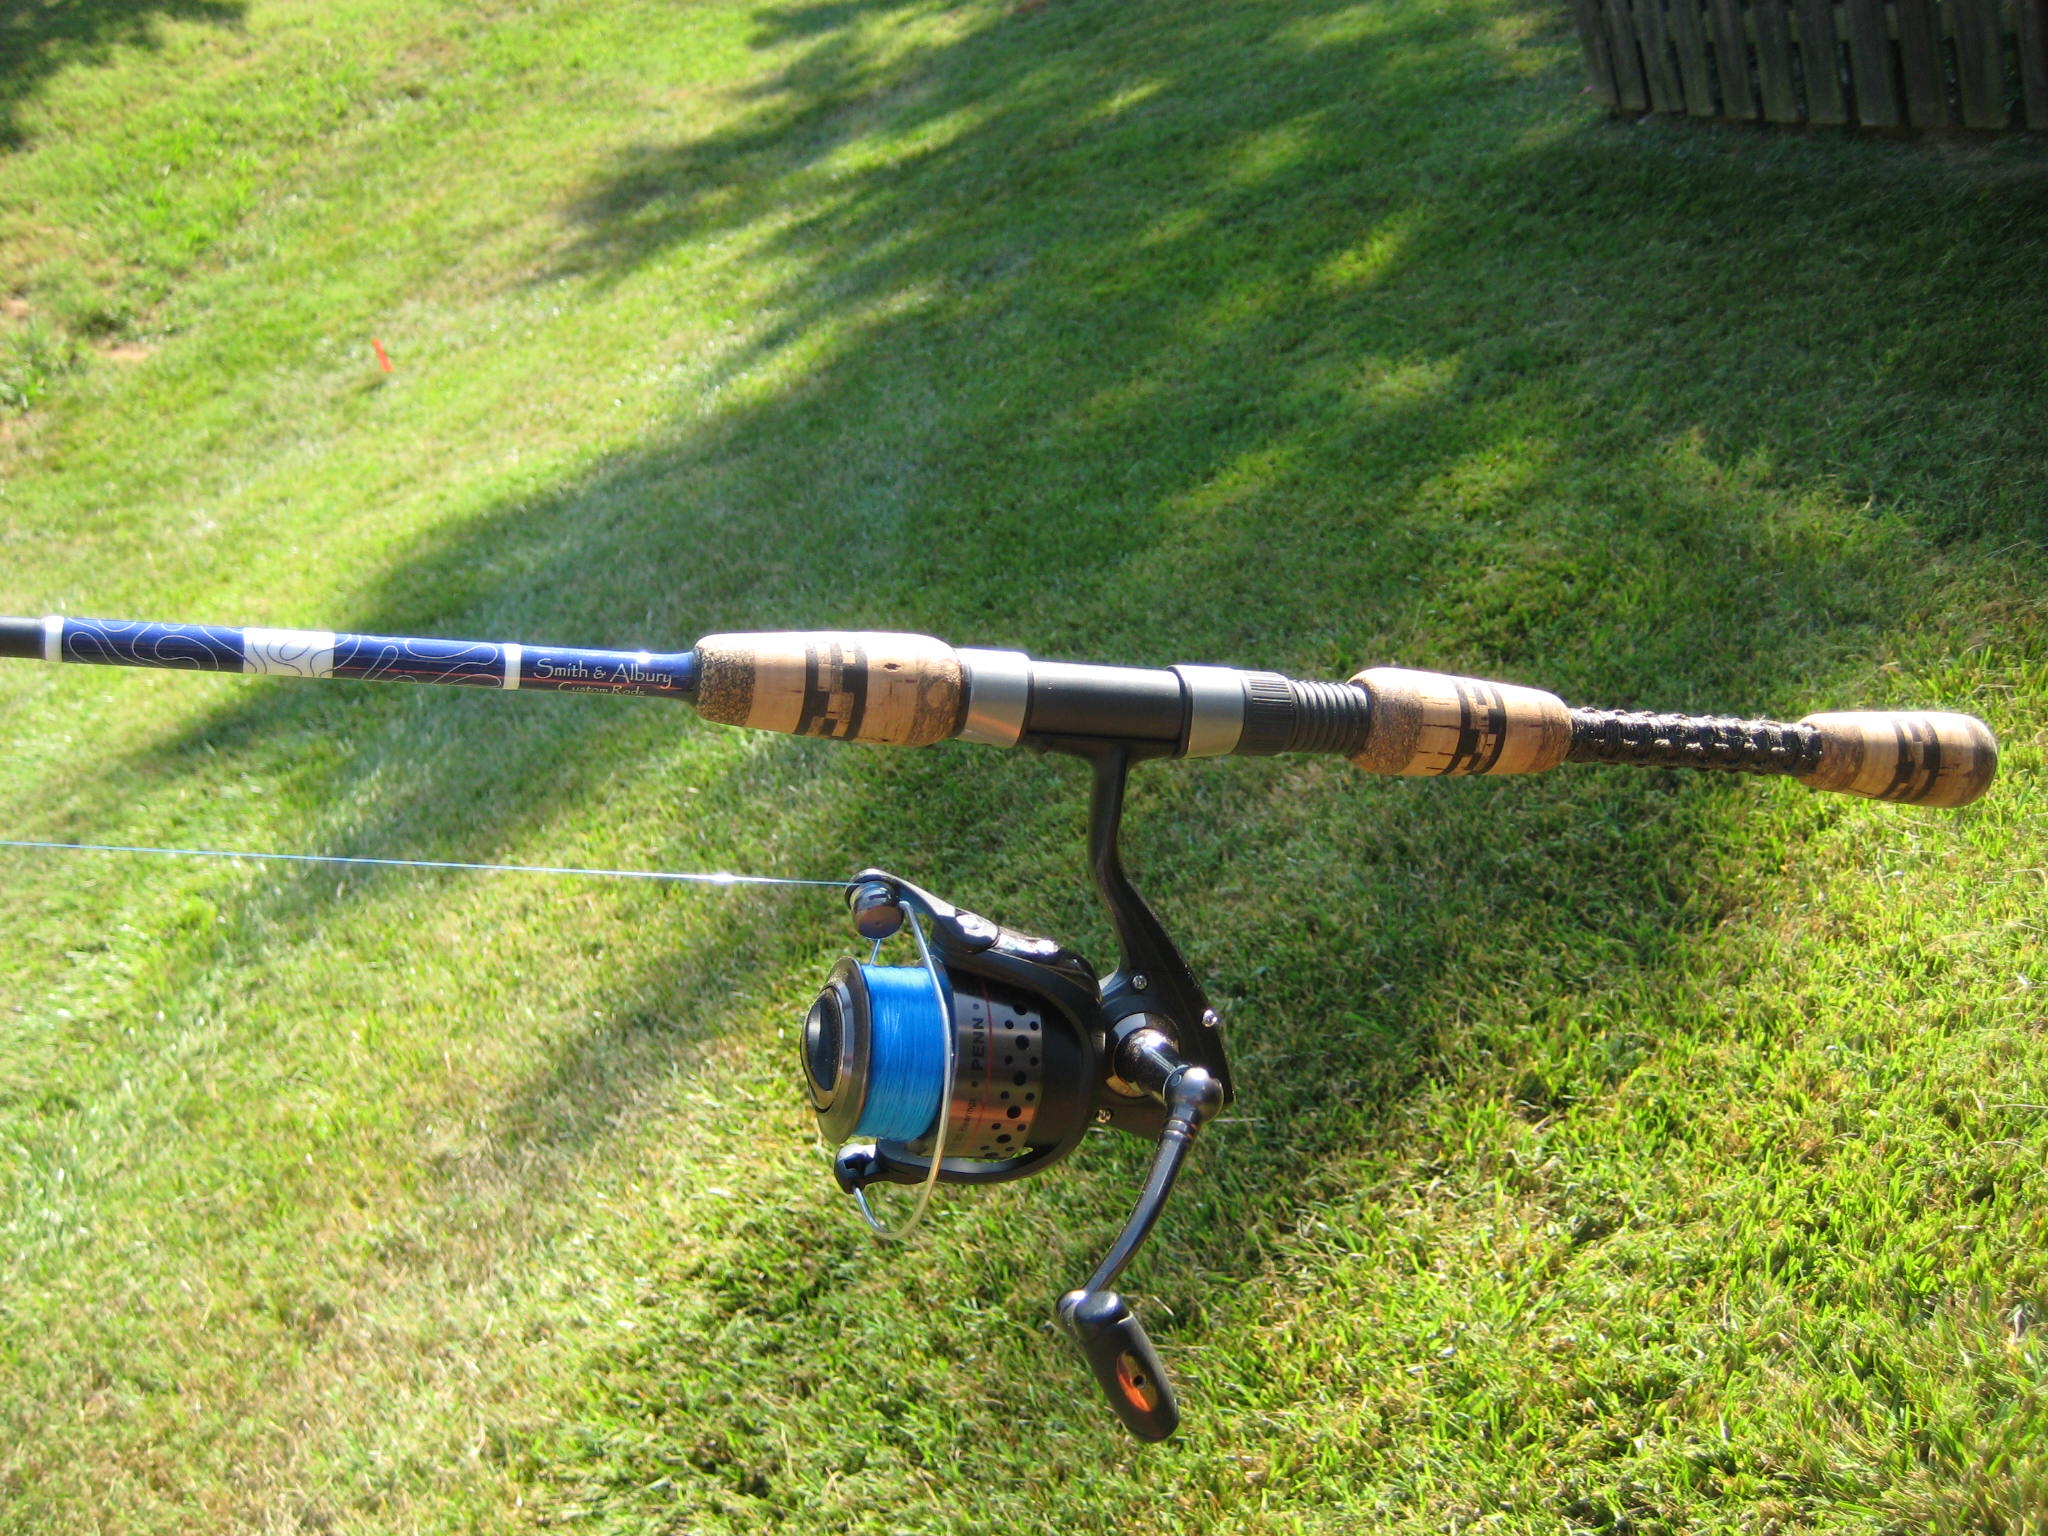 Cork split-grip on bluefish rod with custom decal